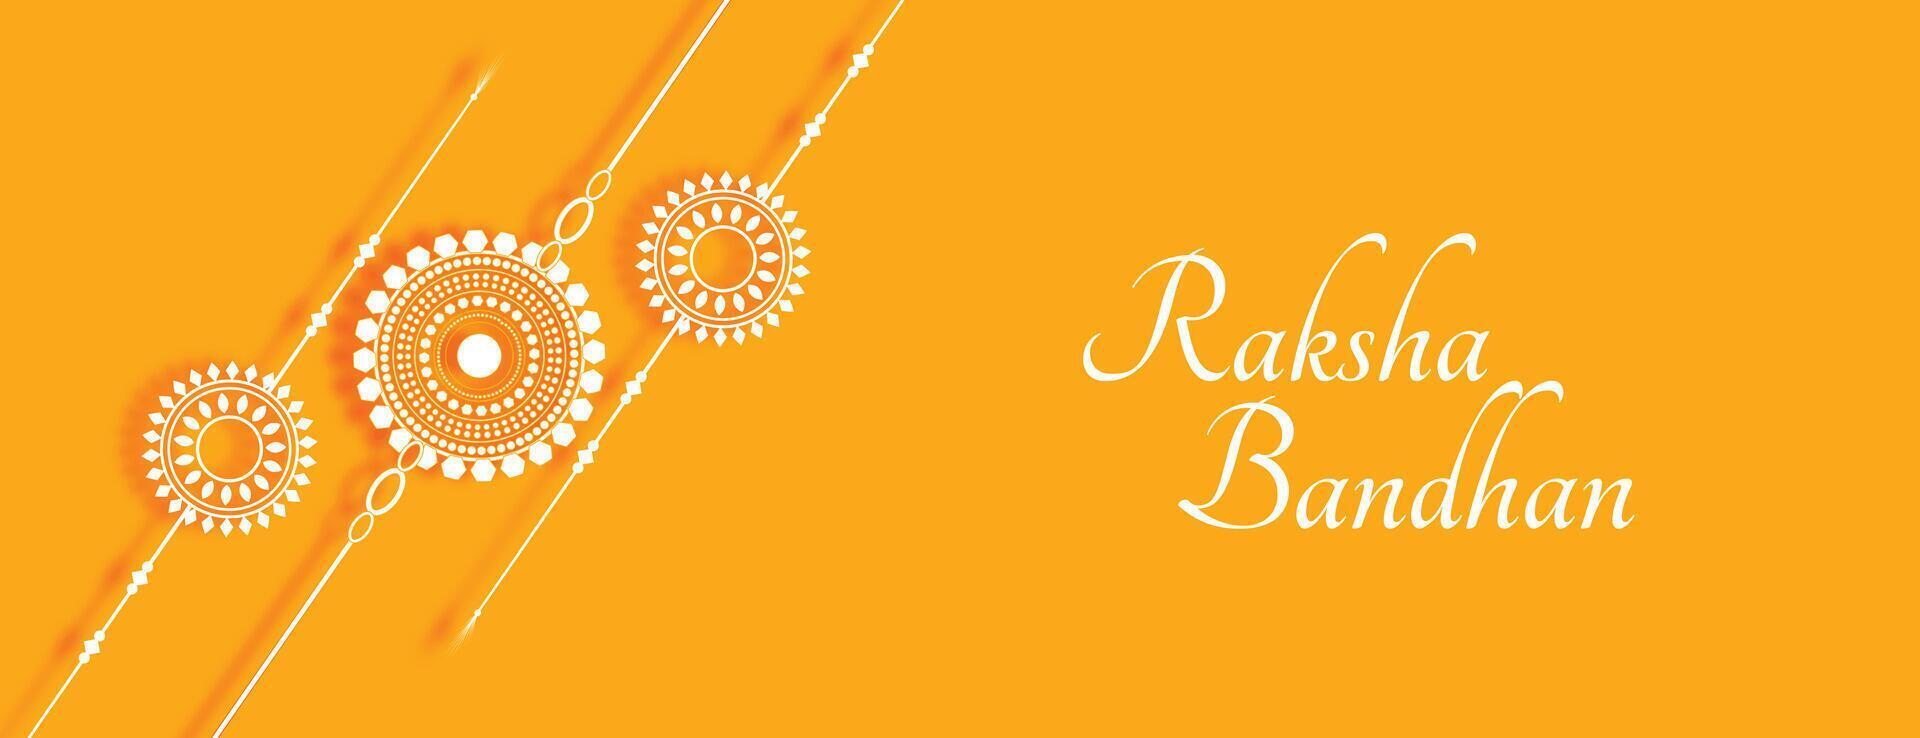 eleganta Raksha bandhan gul baner med rakhi design vektor